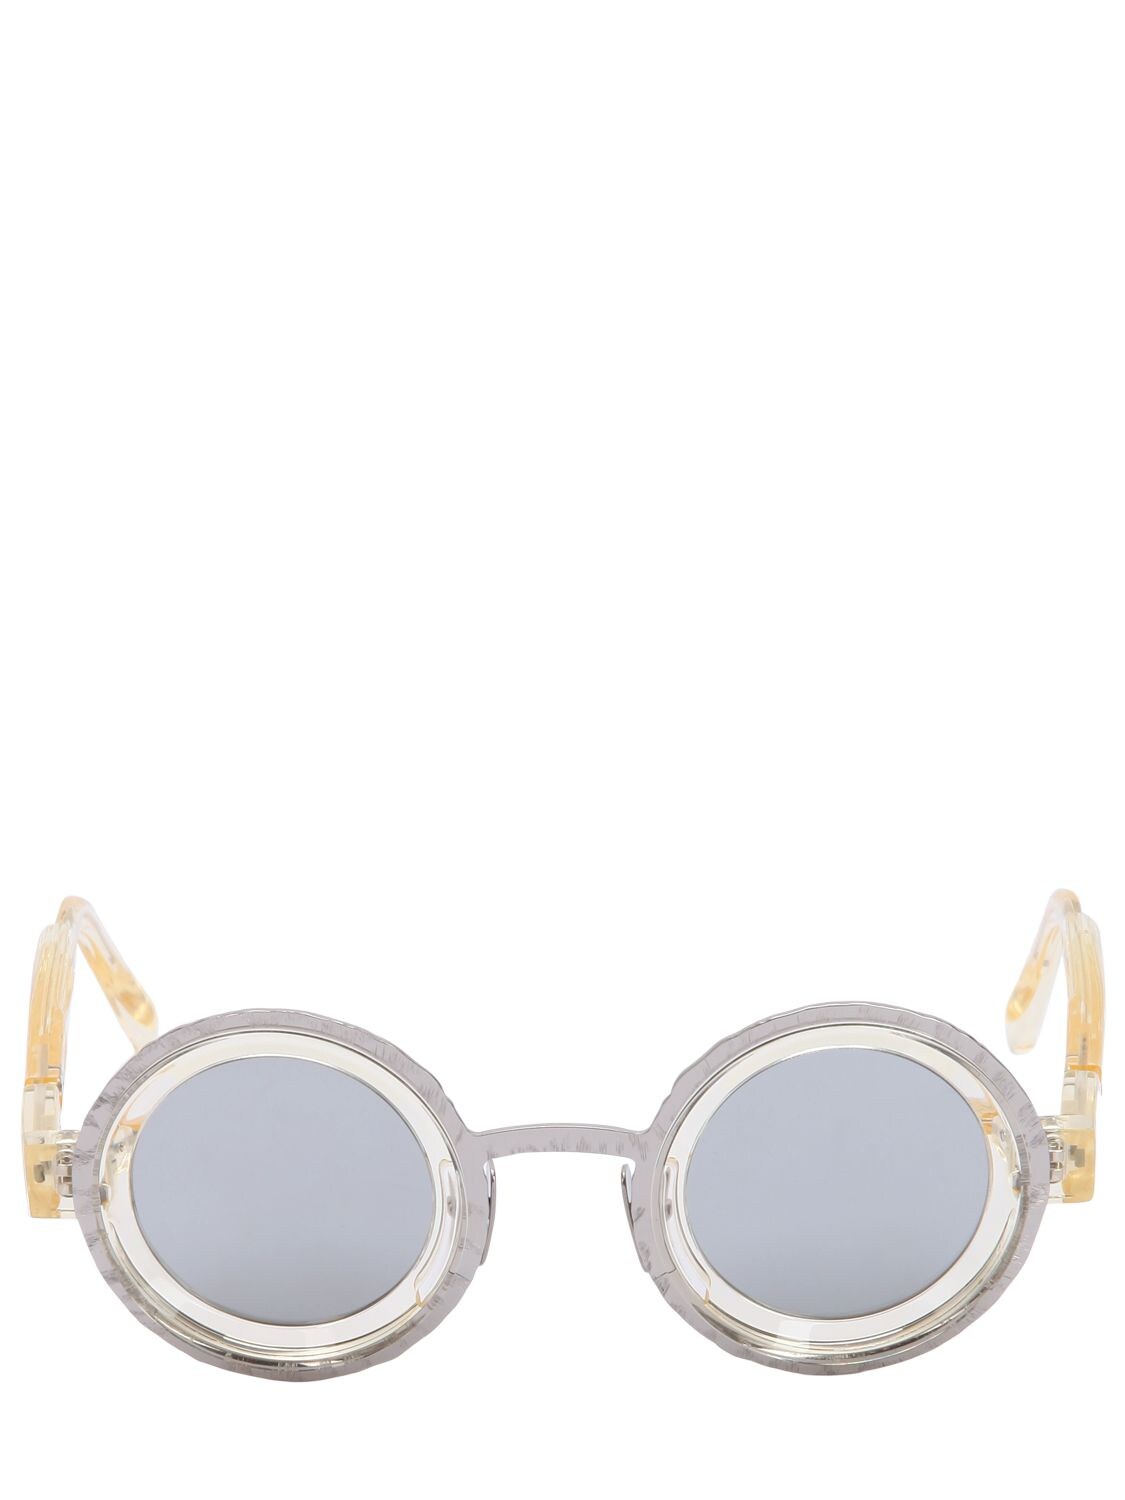 Kuboraum Berlin Double Frame Mirrored Round Sunglasses In Champagnesilver